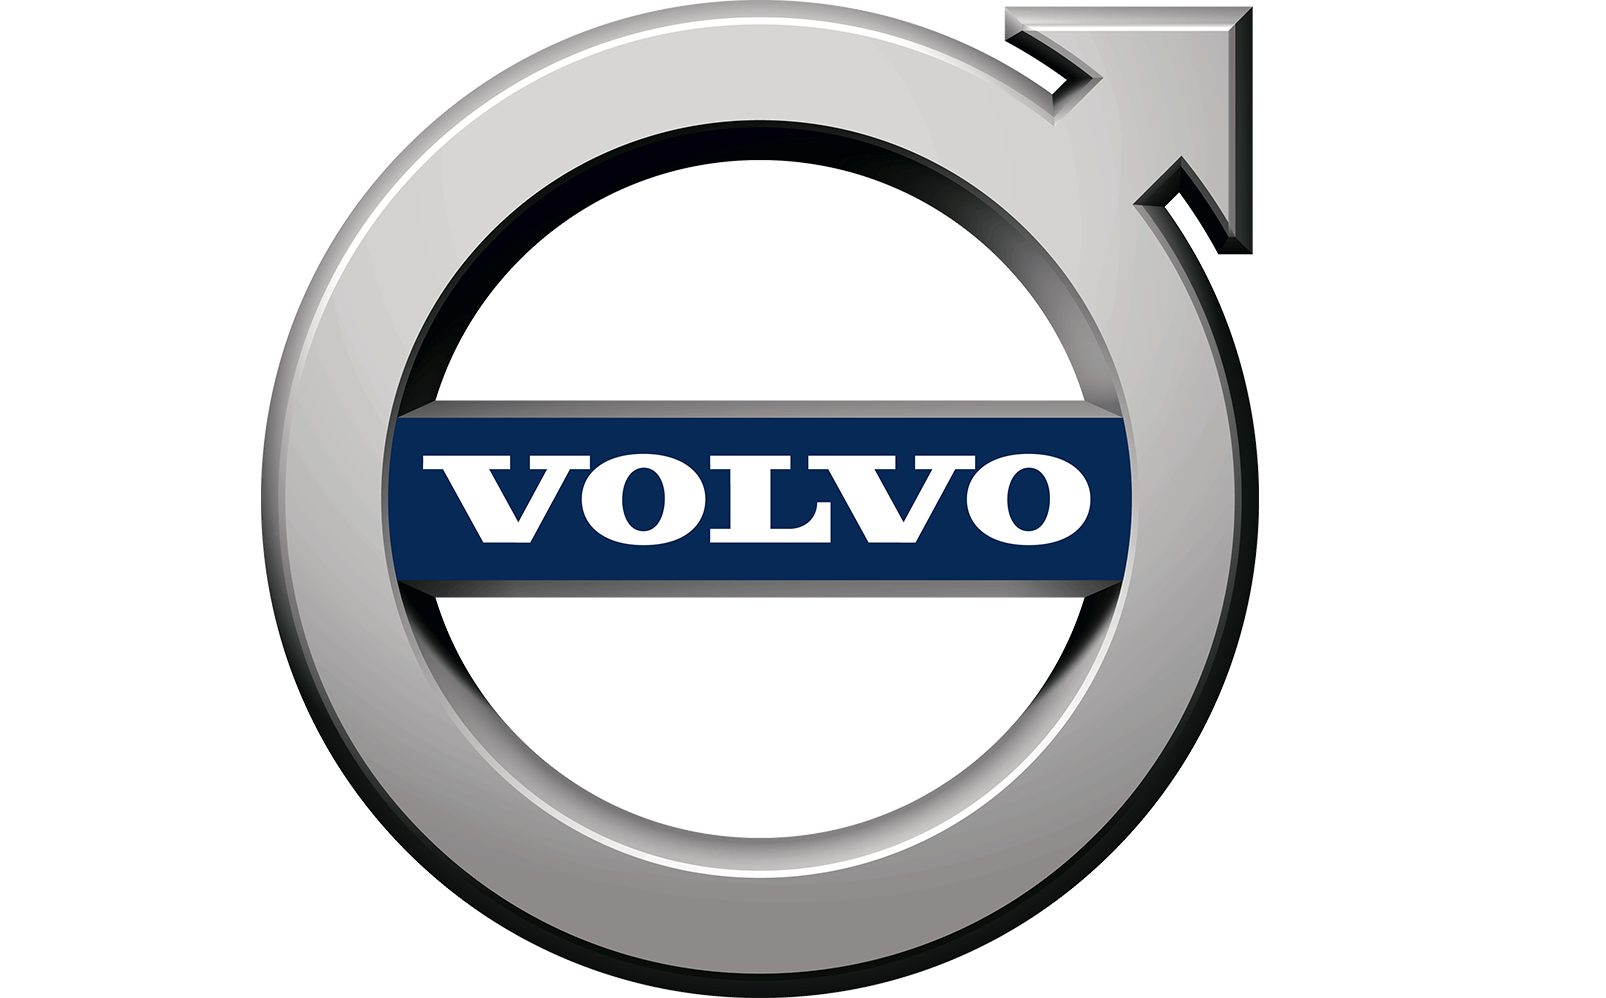 Volvo x PureWeb